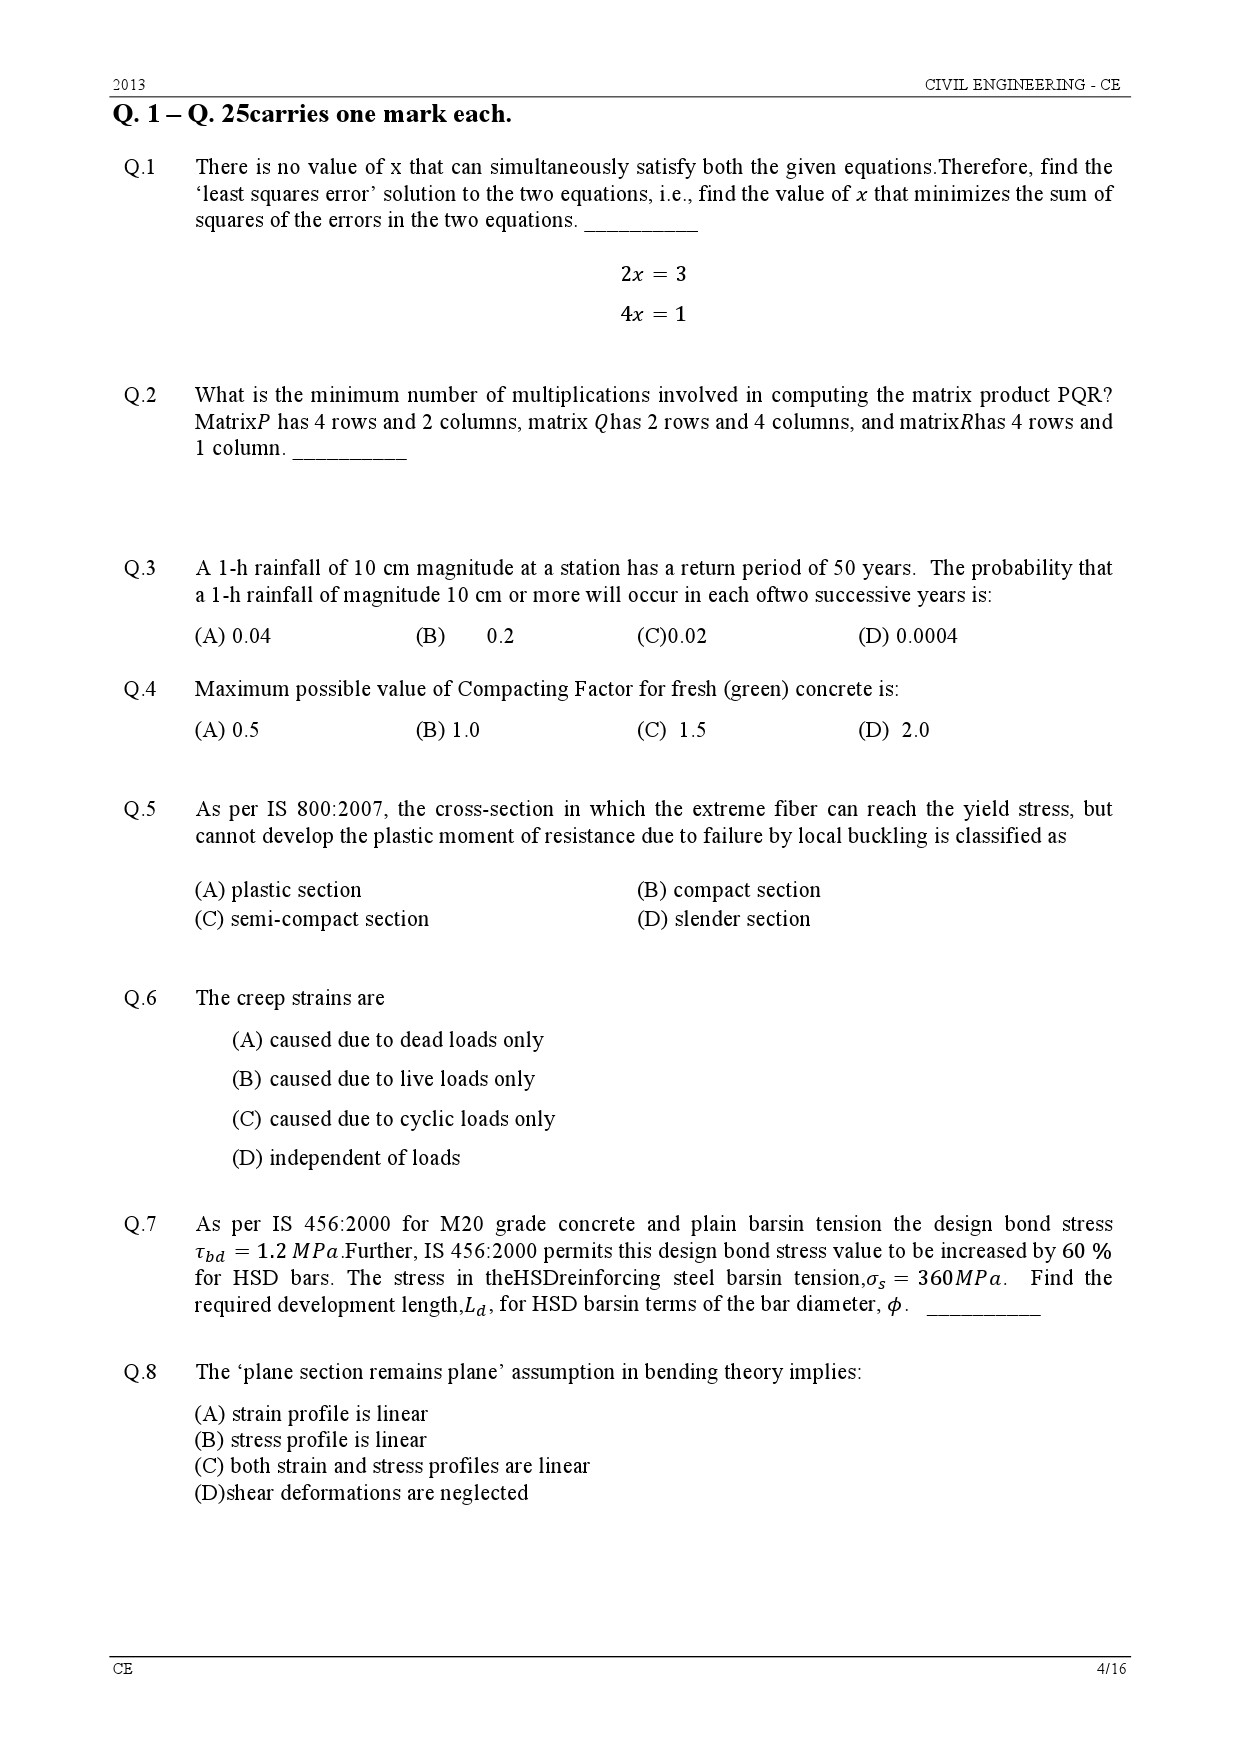 GATE Exam Question Paper 2013 Civil Engineering 4